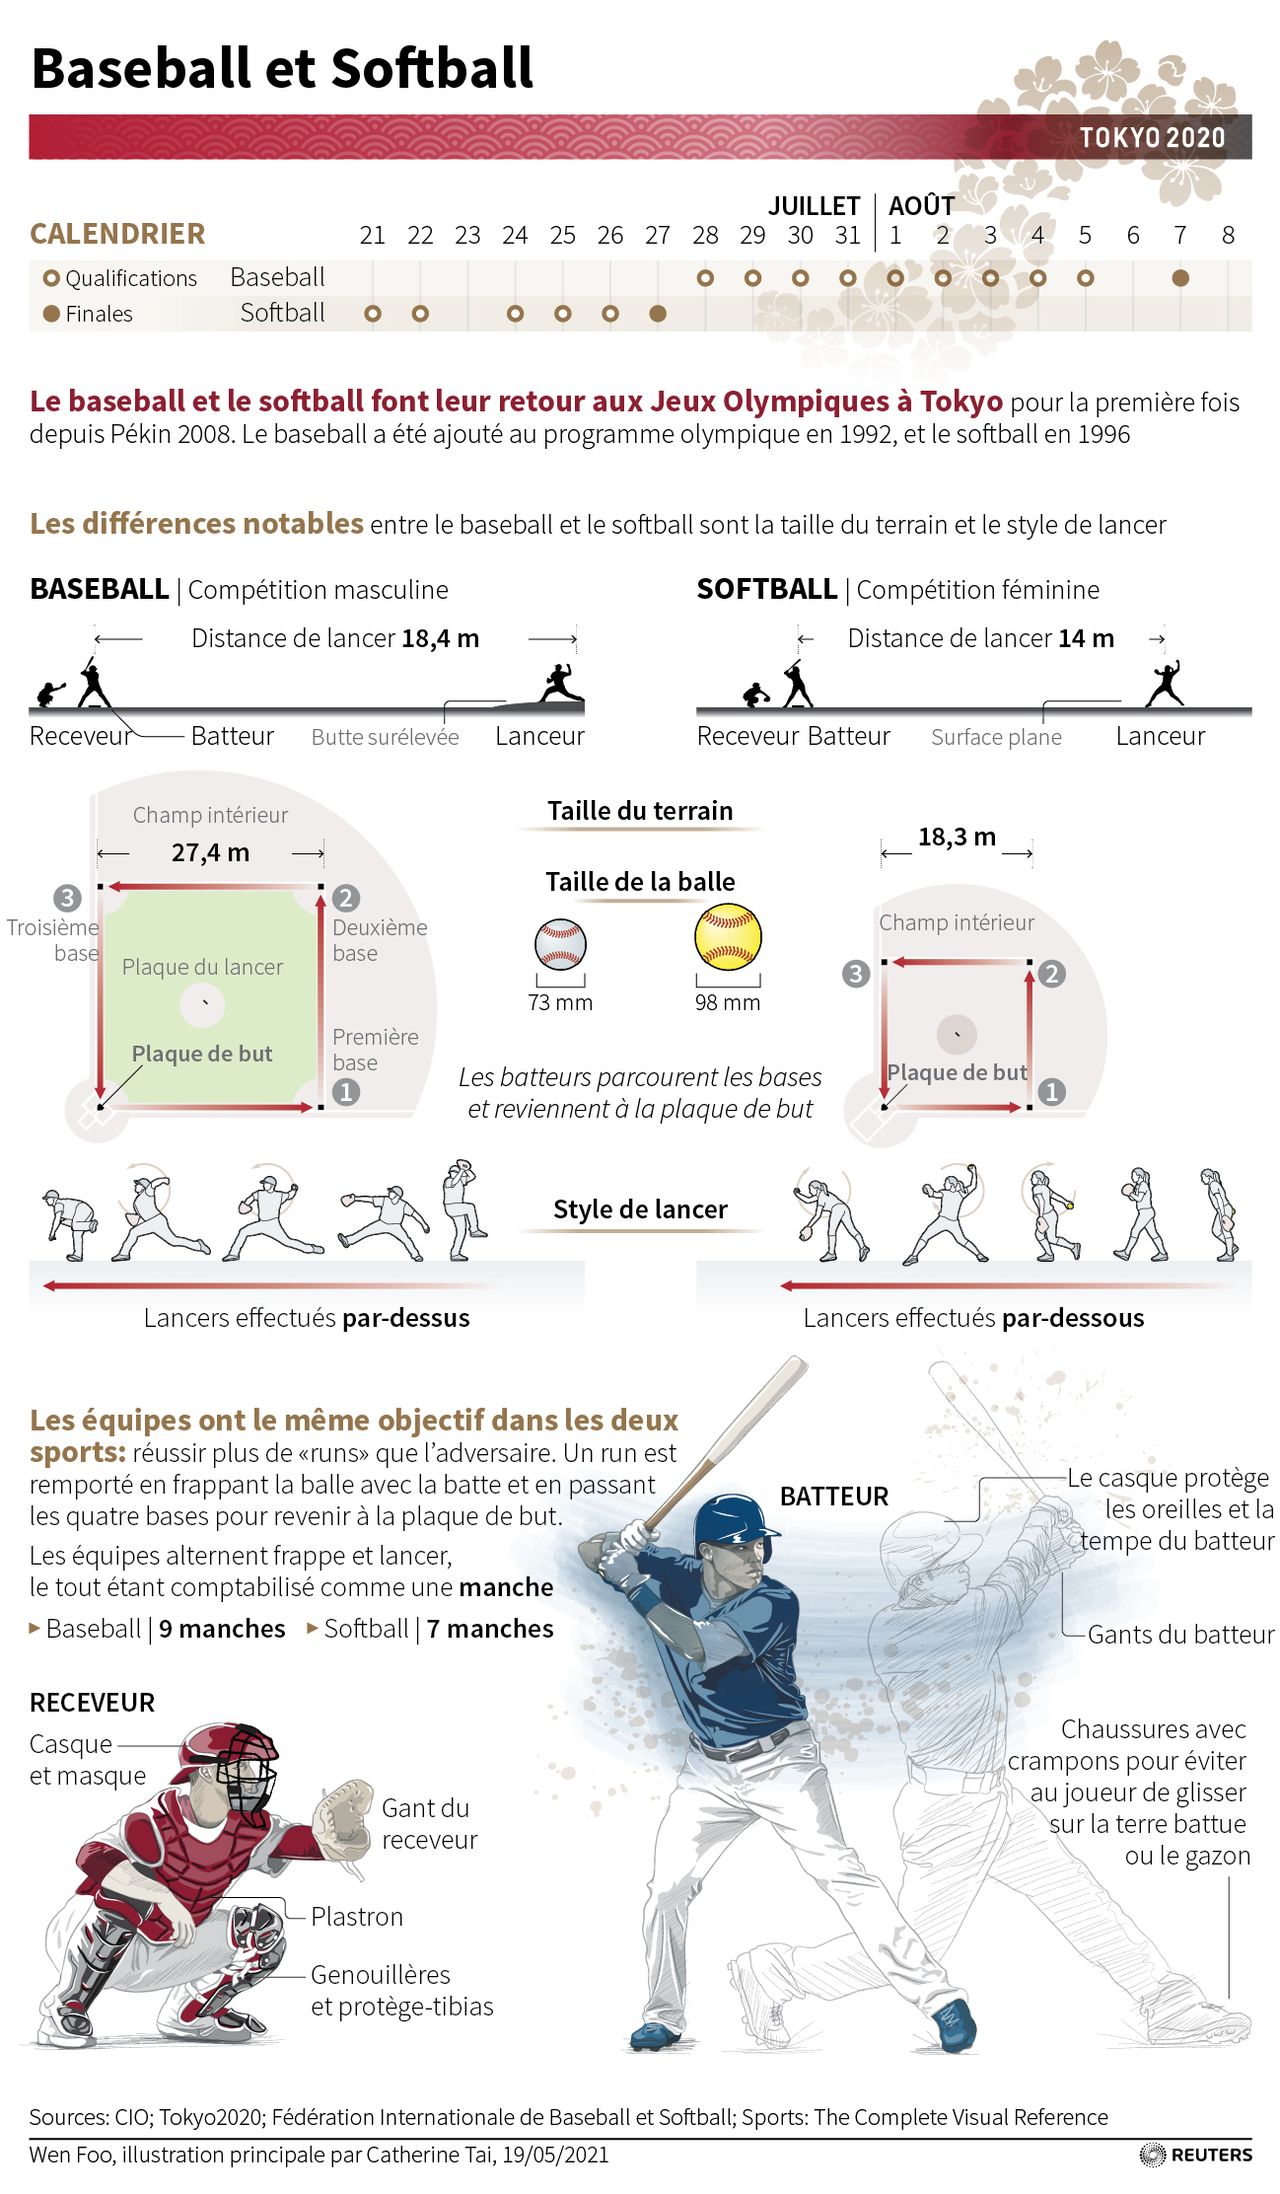 Les disciplines de Tokyo 2020 : Baseball et Softball